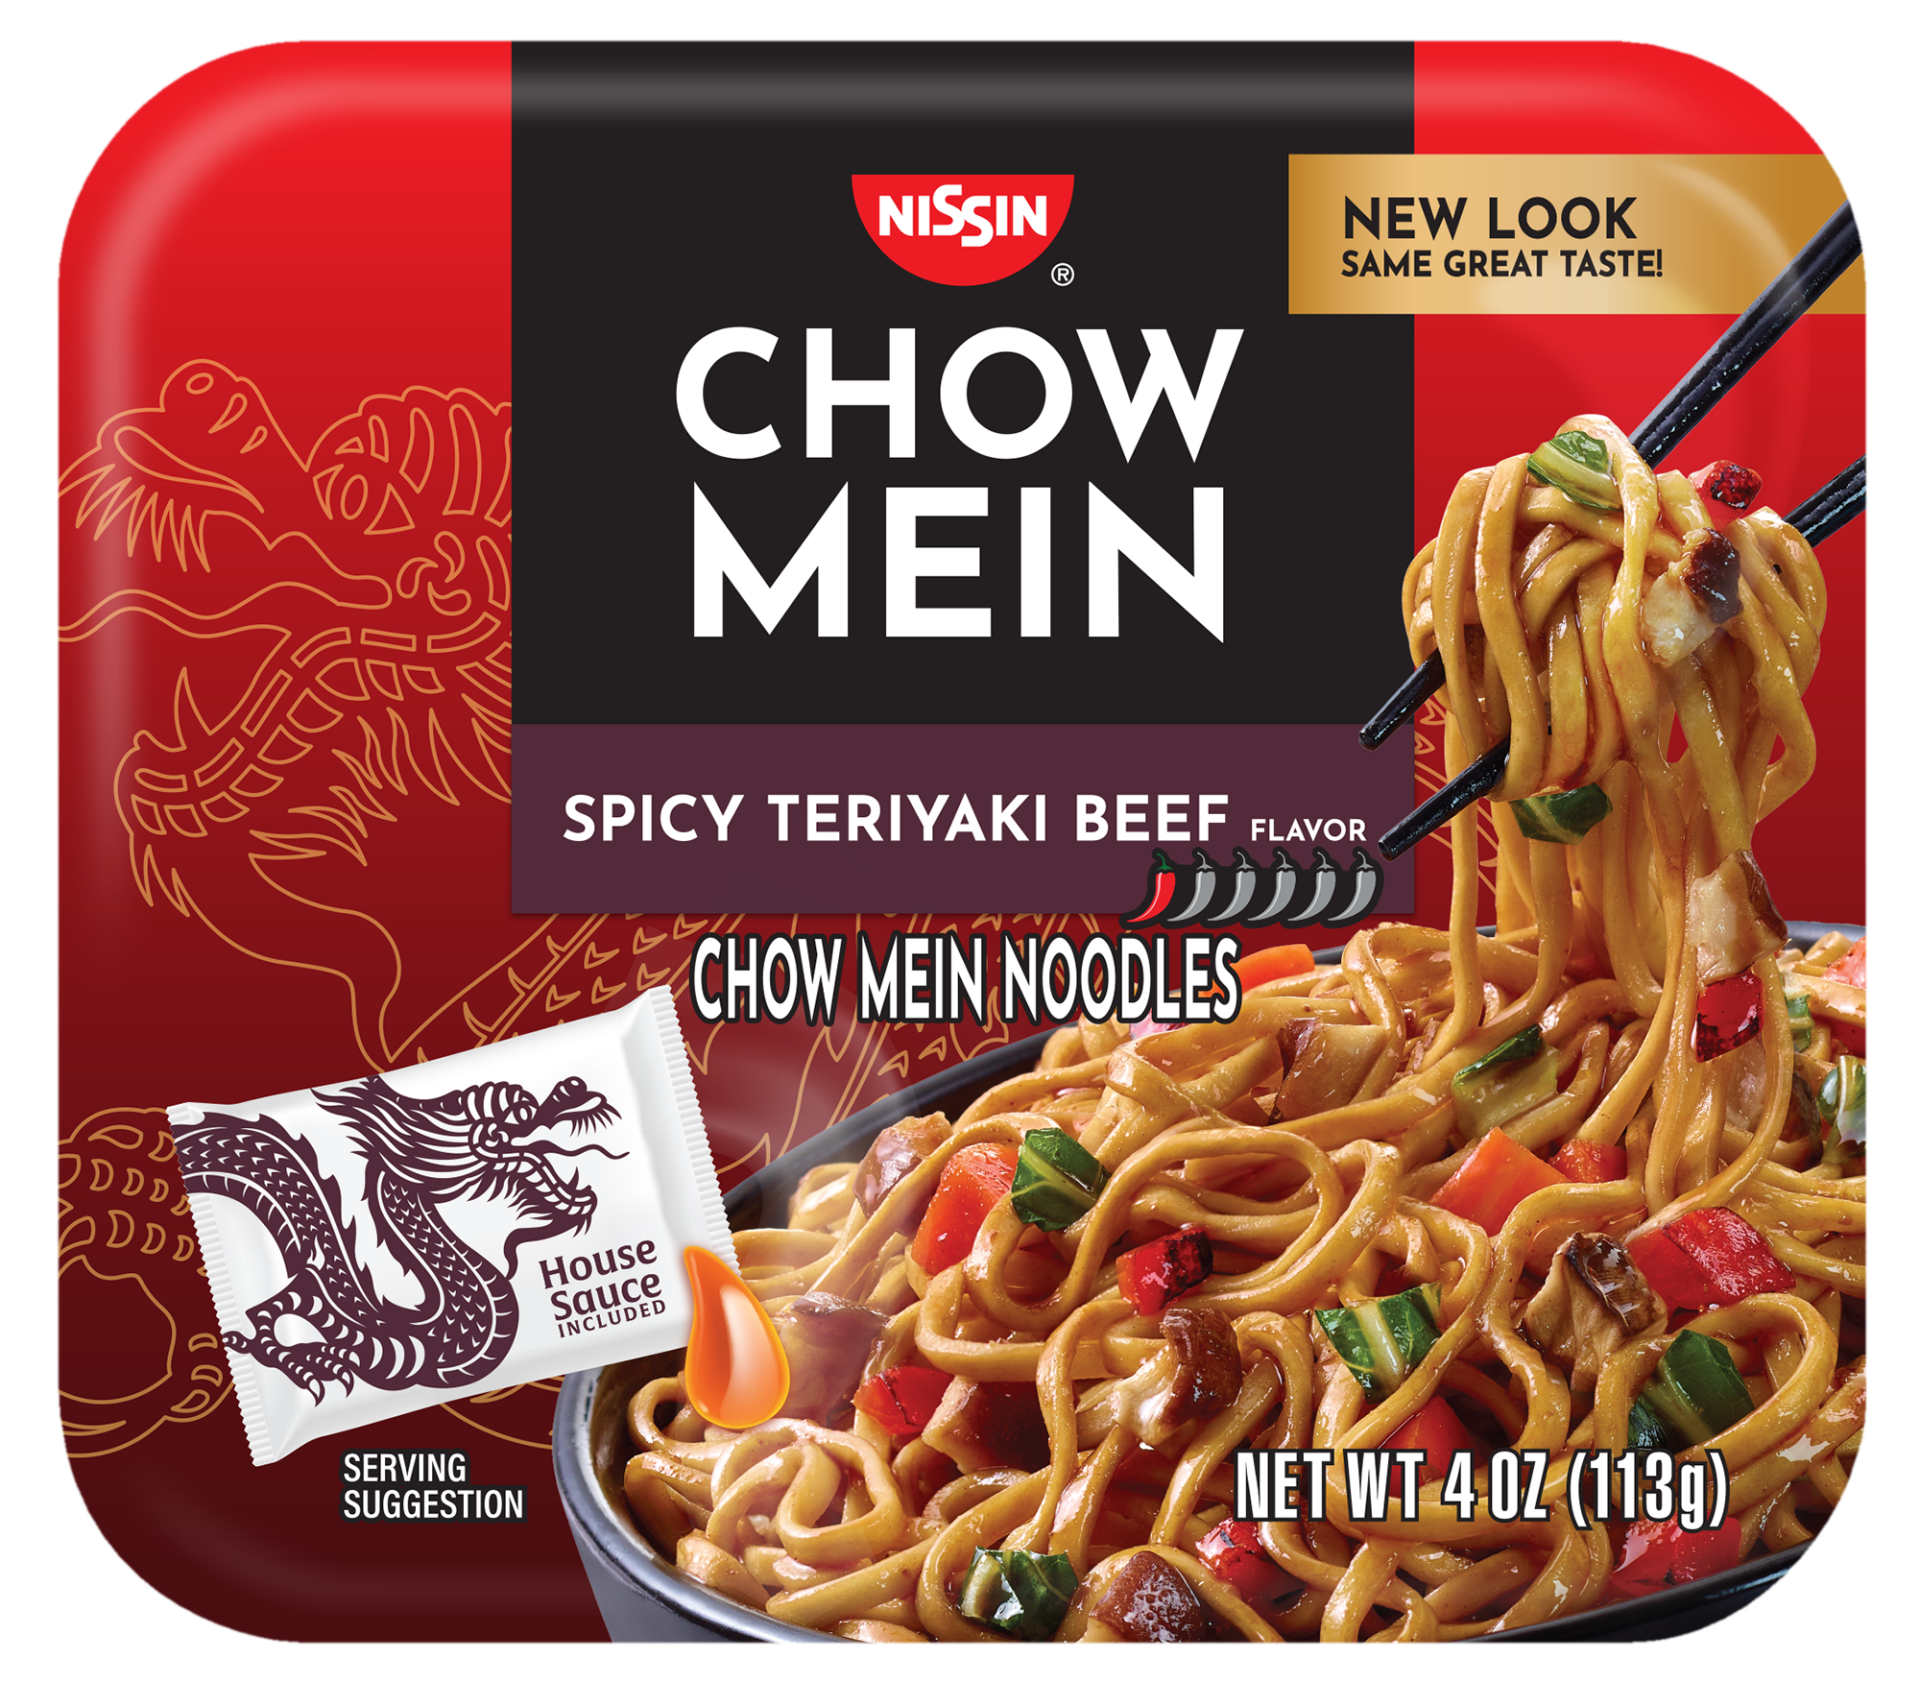 Chow Mein Spicy Teriyaki Beef